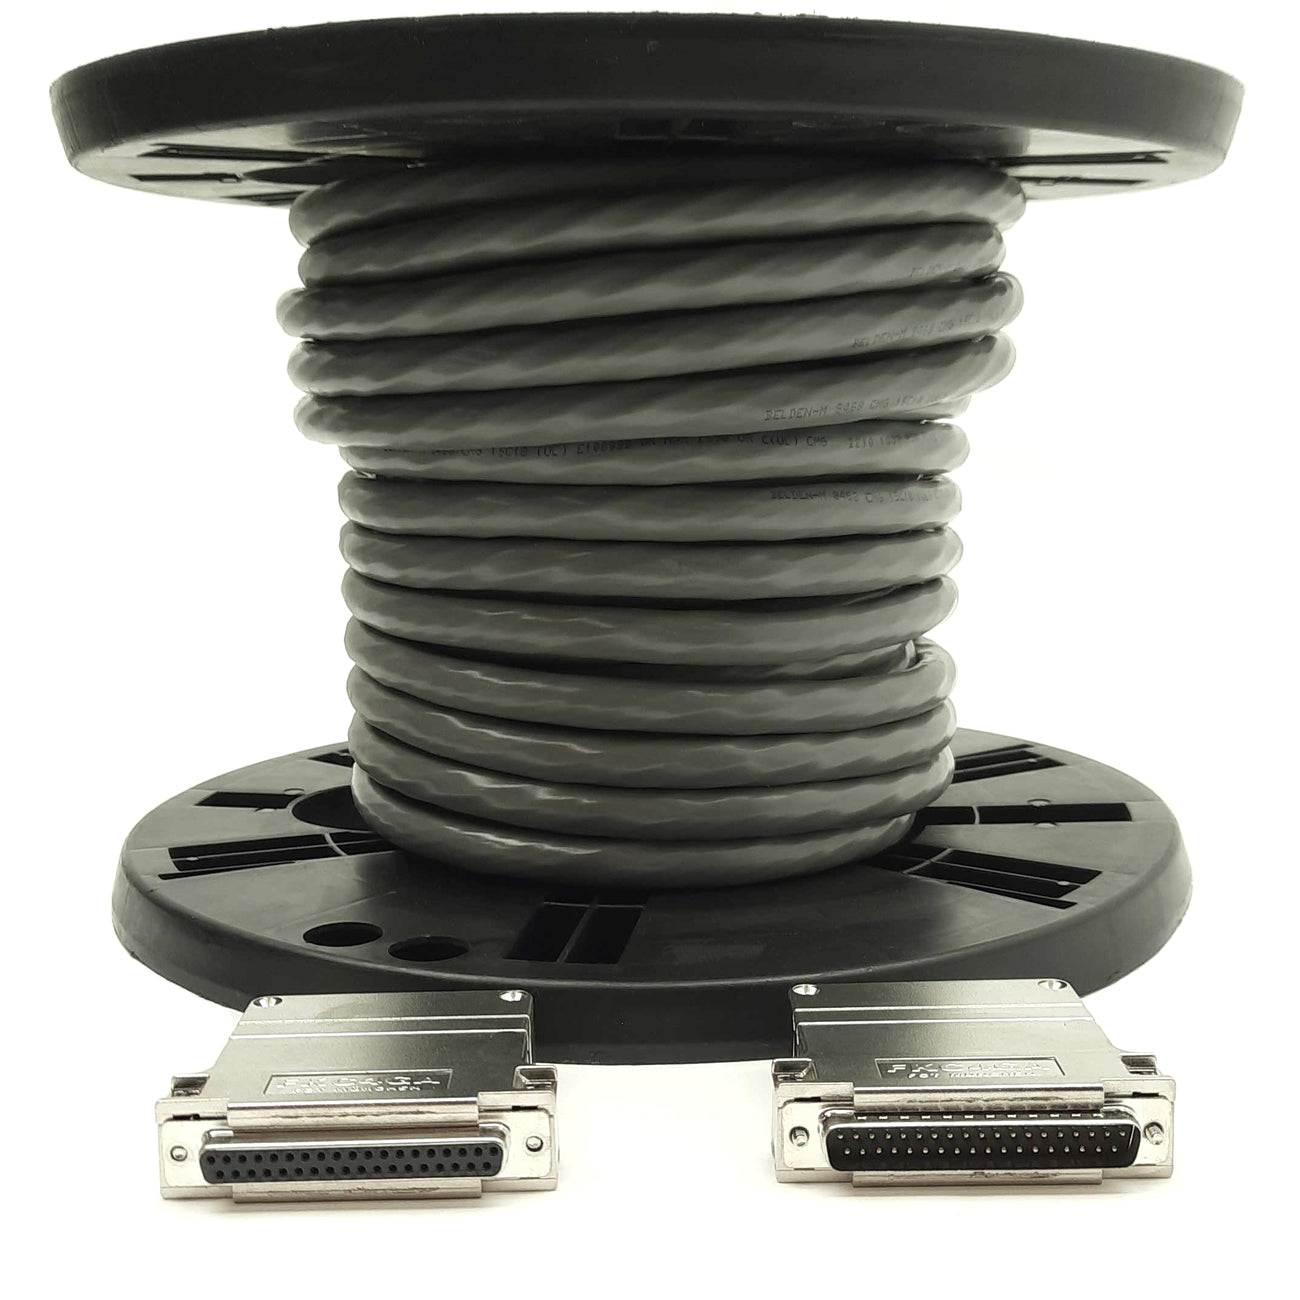 Cables / Connectors